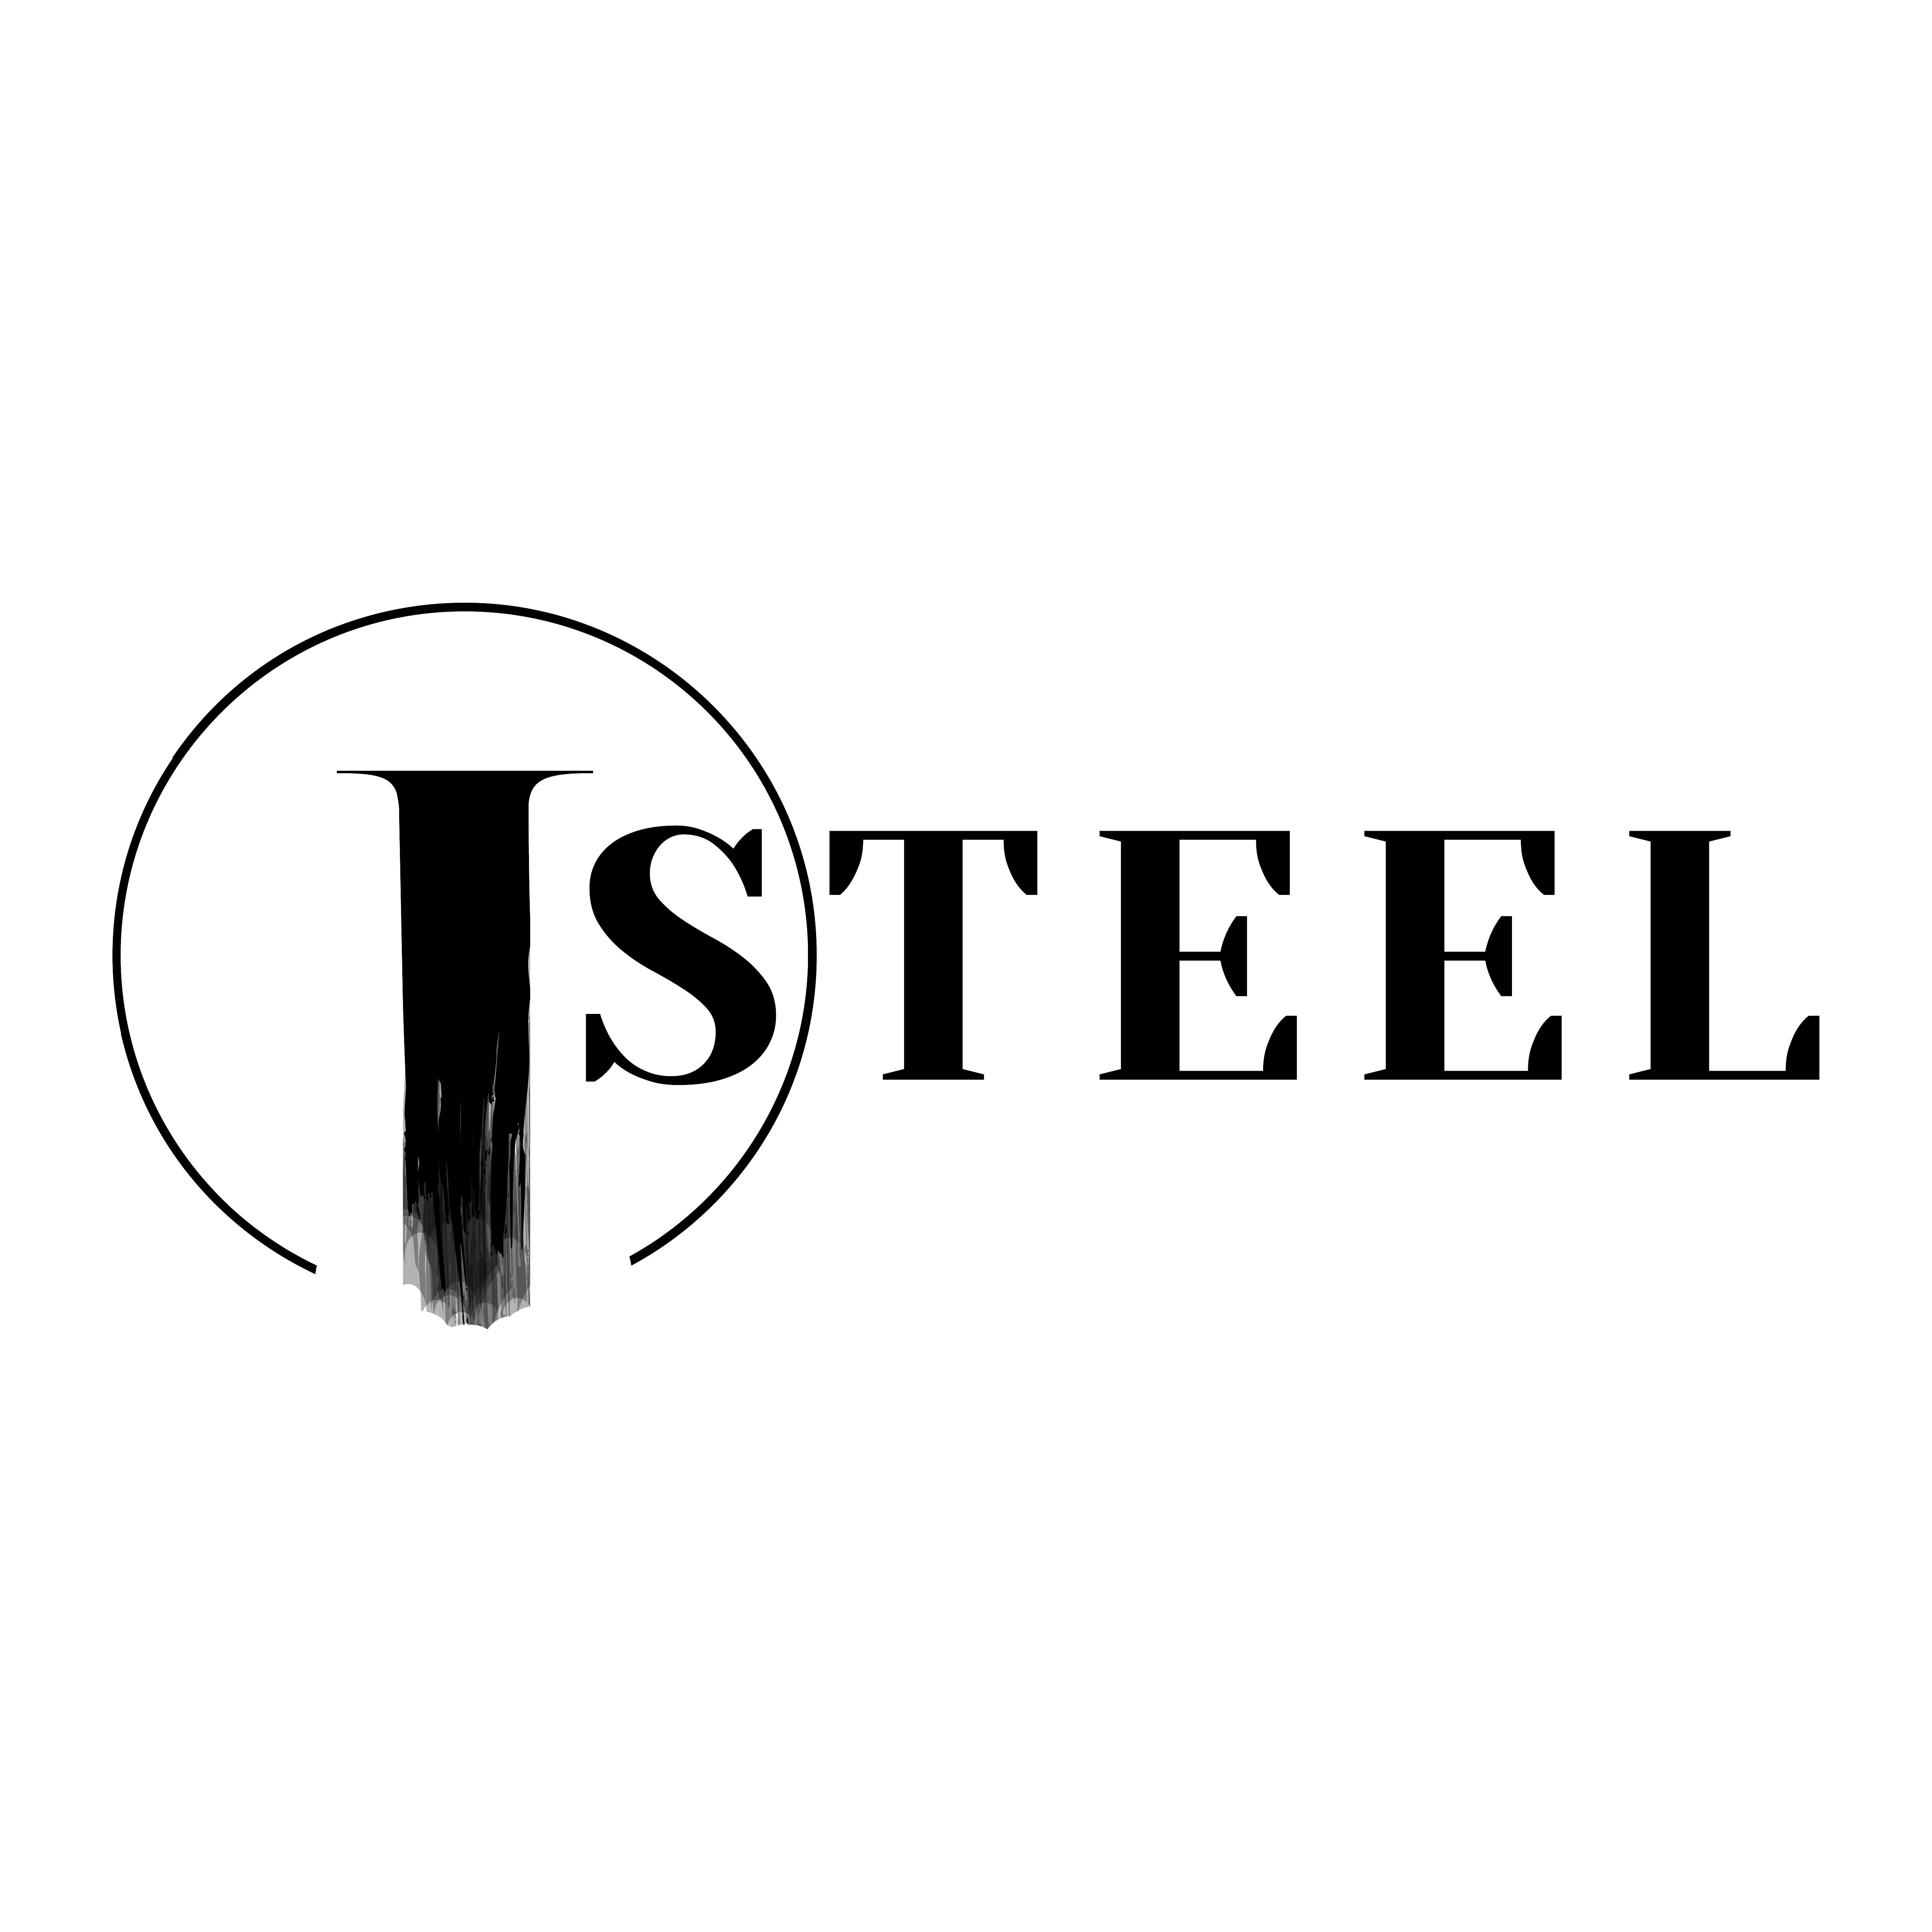 I- Steel